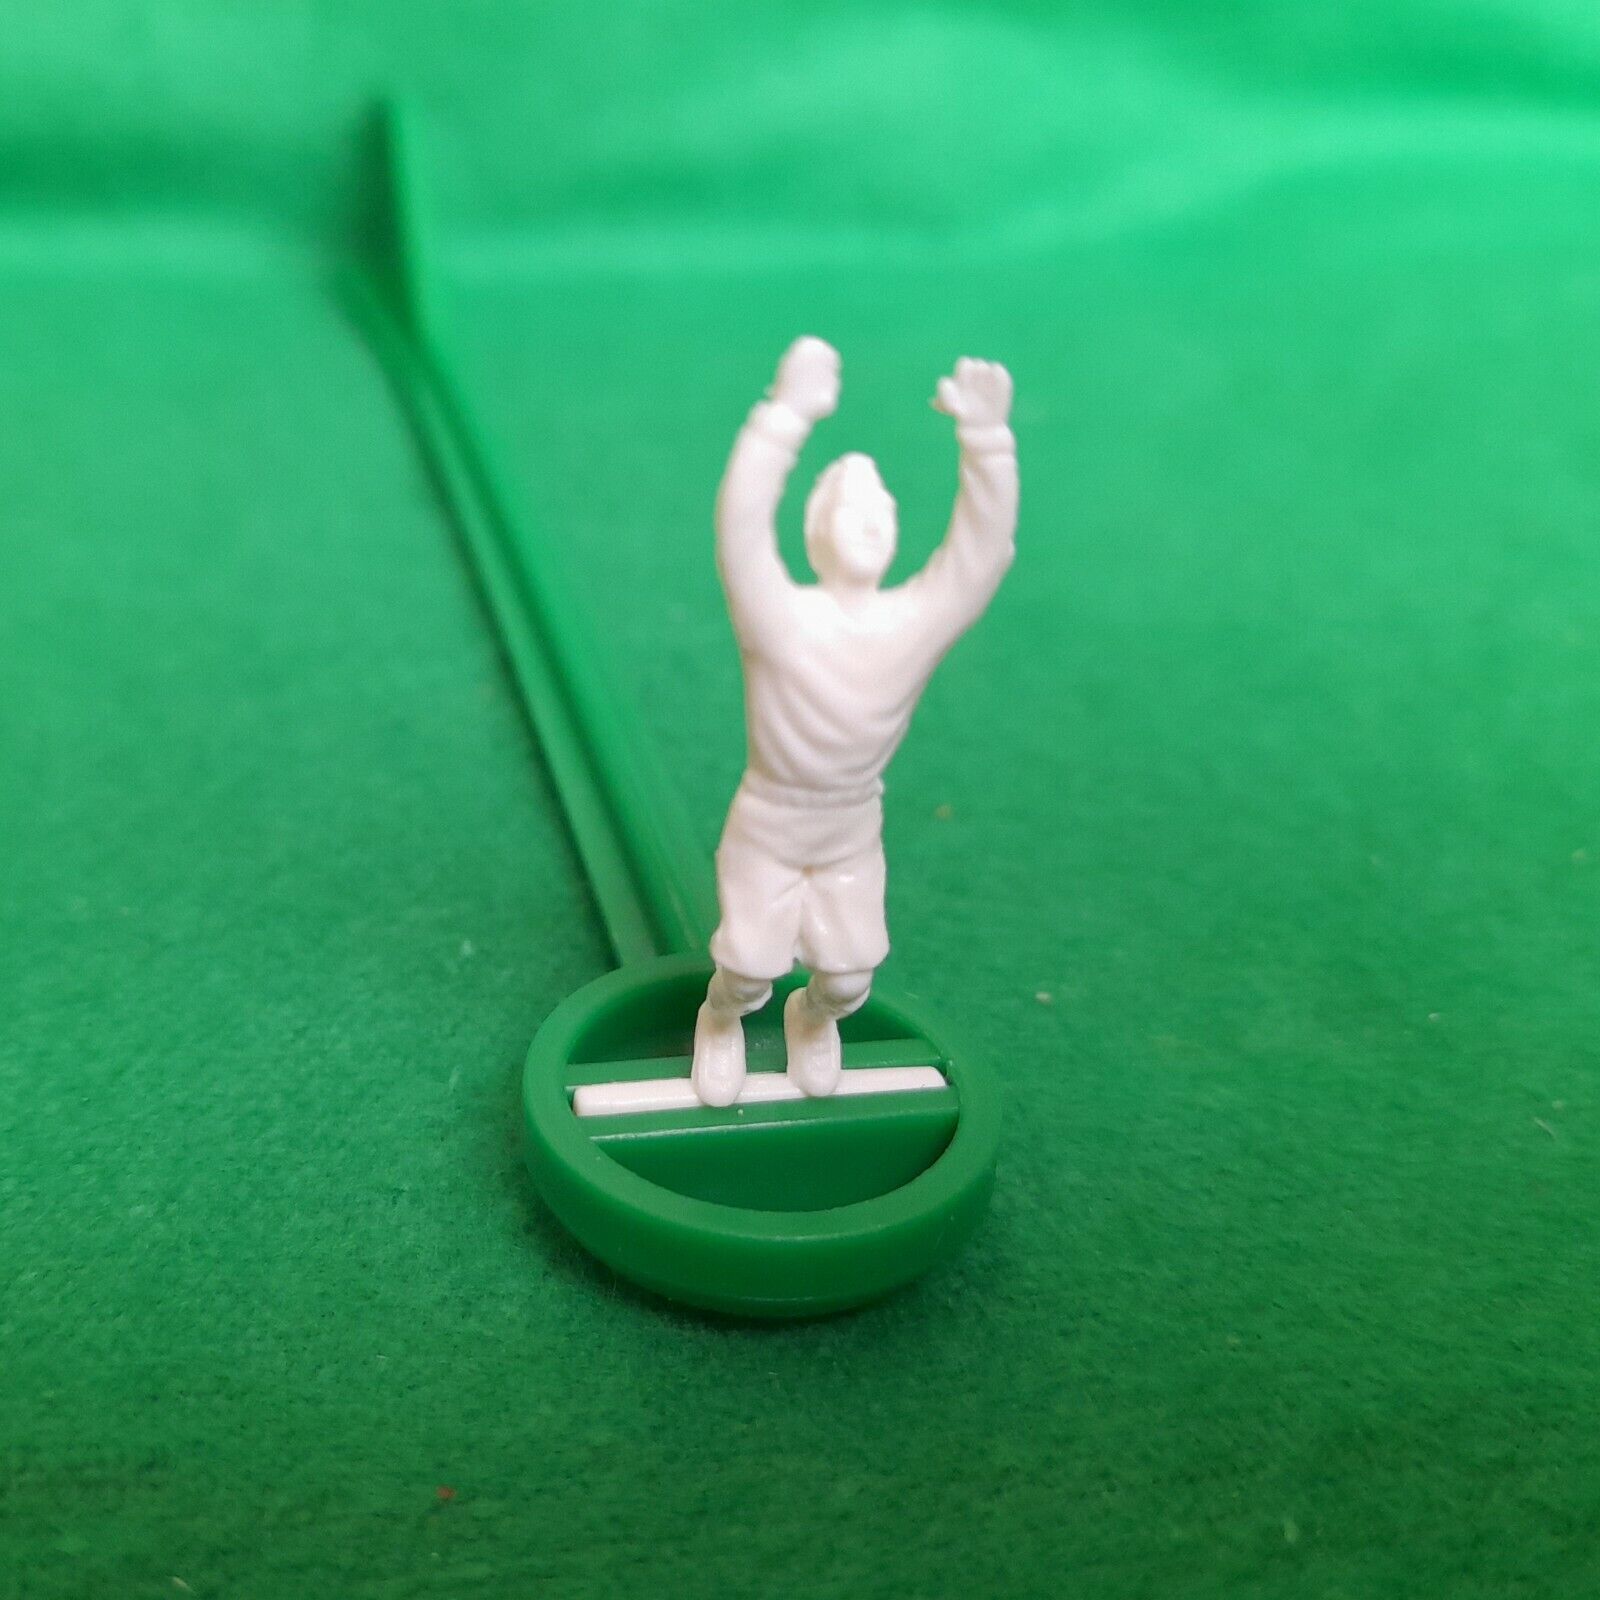 Subbuteo/Santiago. VINTAGE DIVING Goalkeeper & Rod. White figure, green rod.